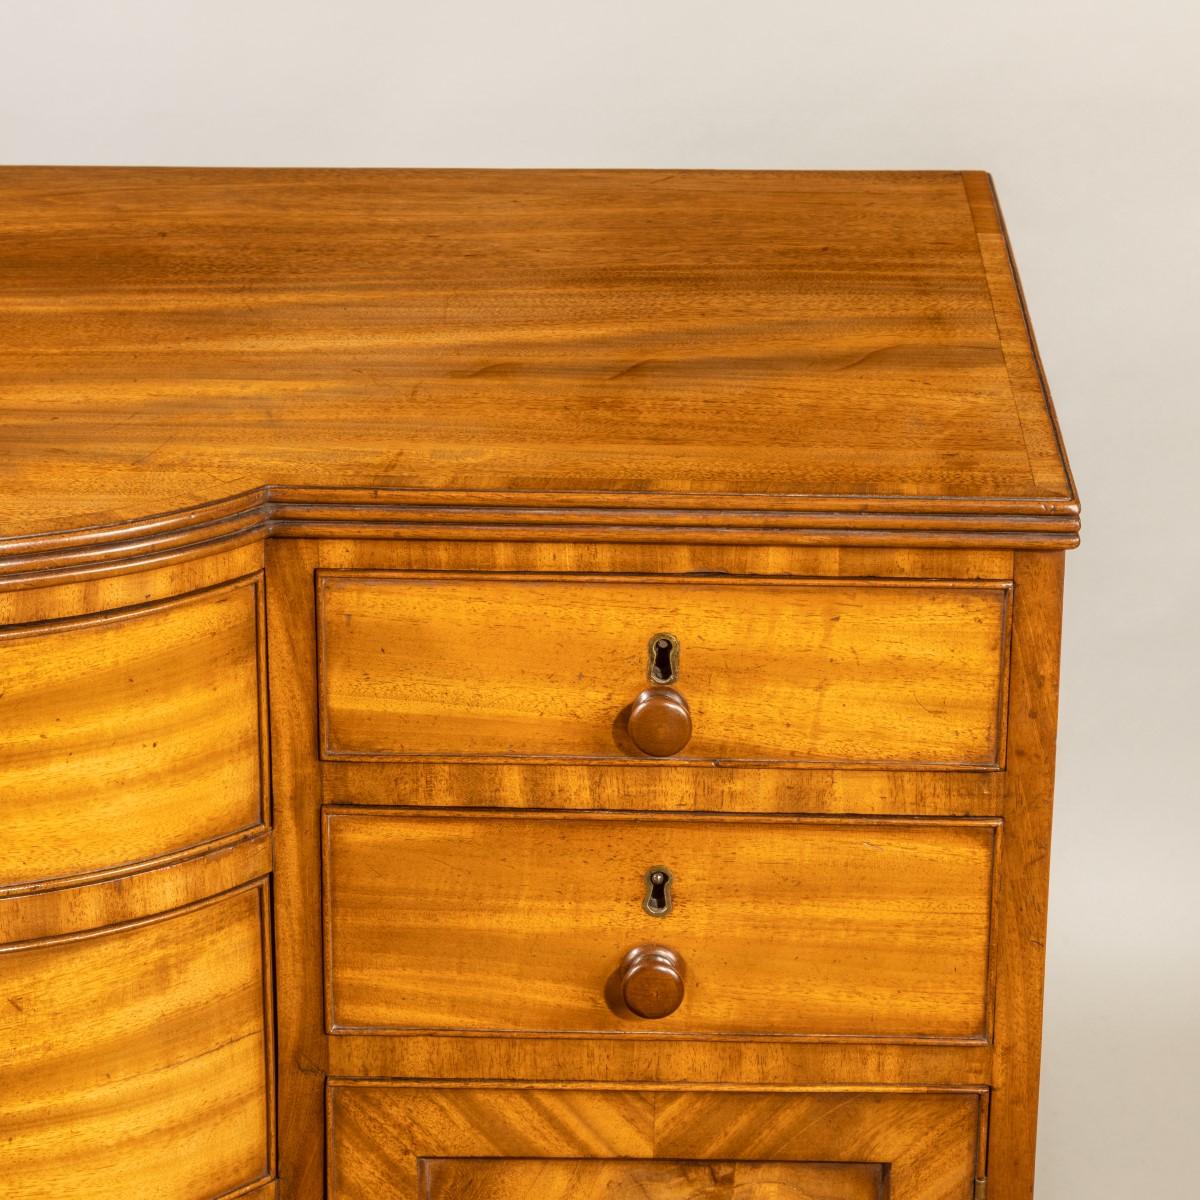 A late Regency mahogany side cabinet